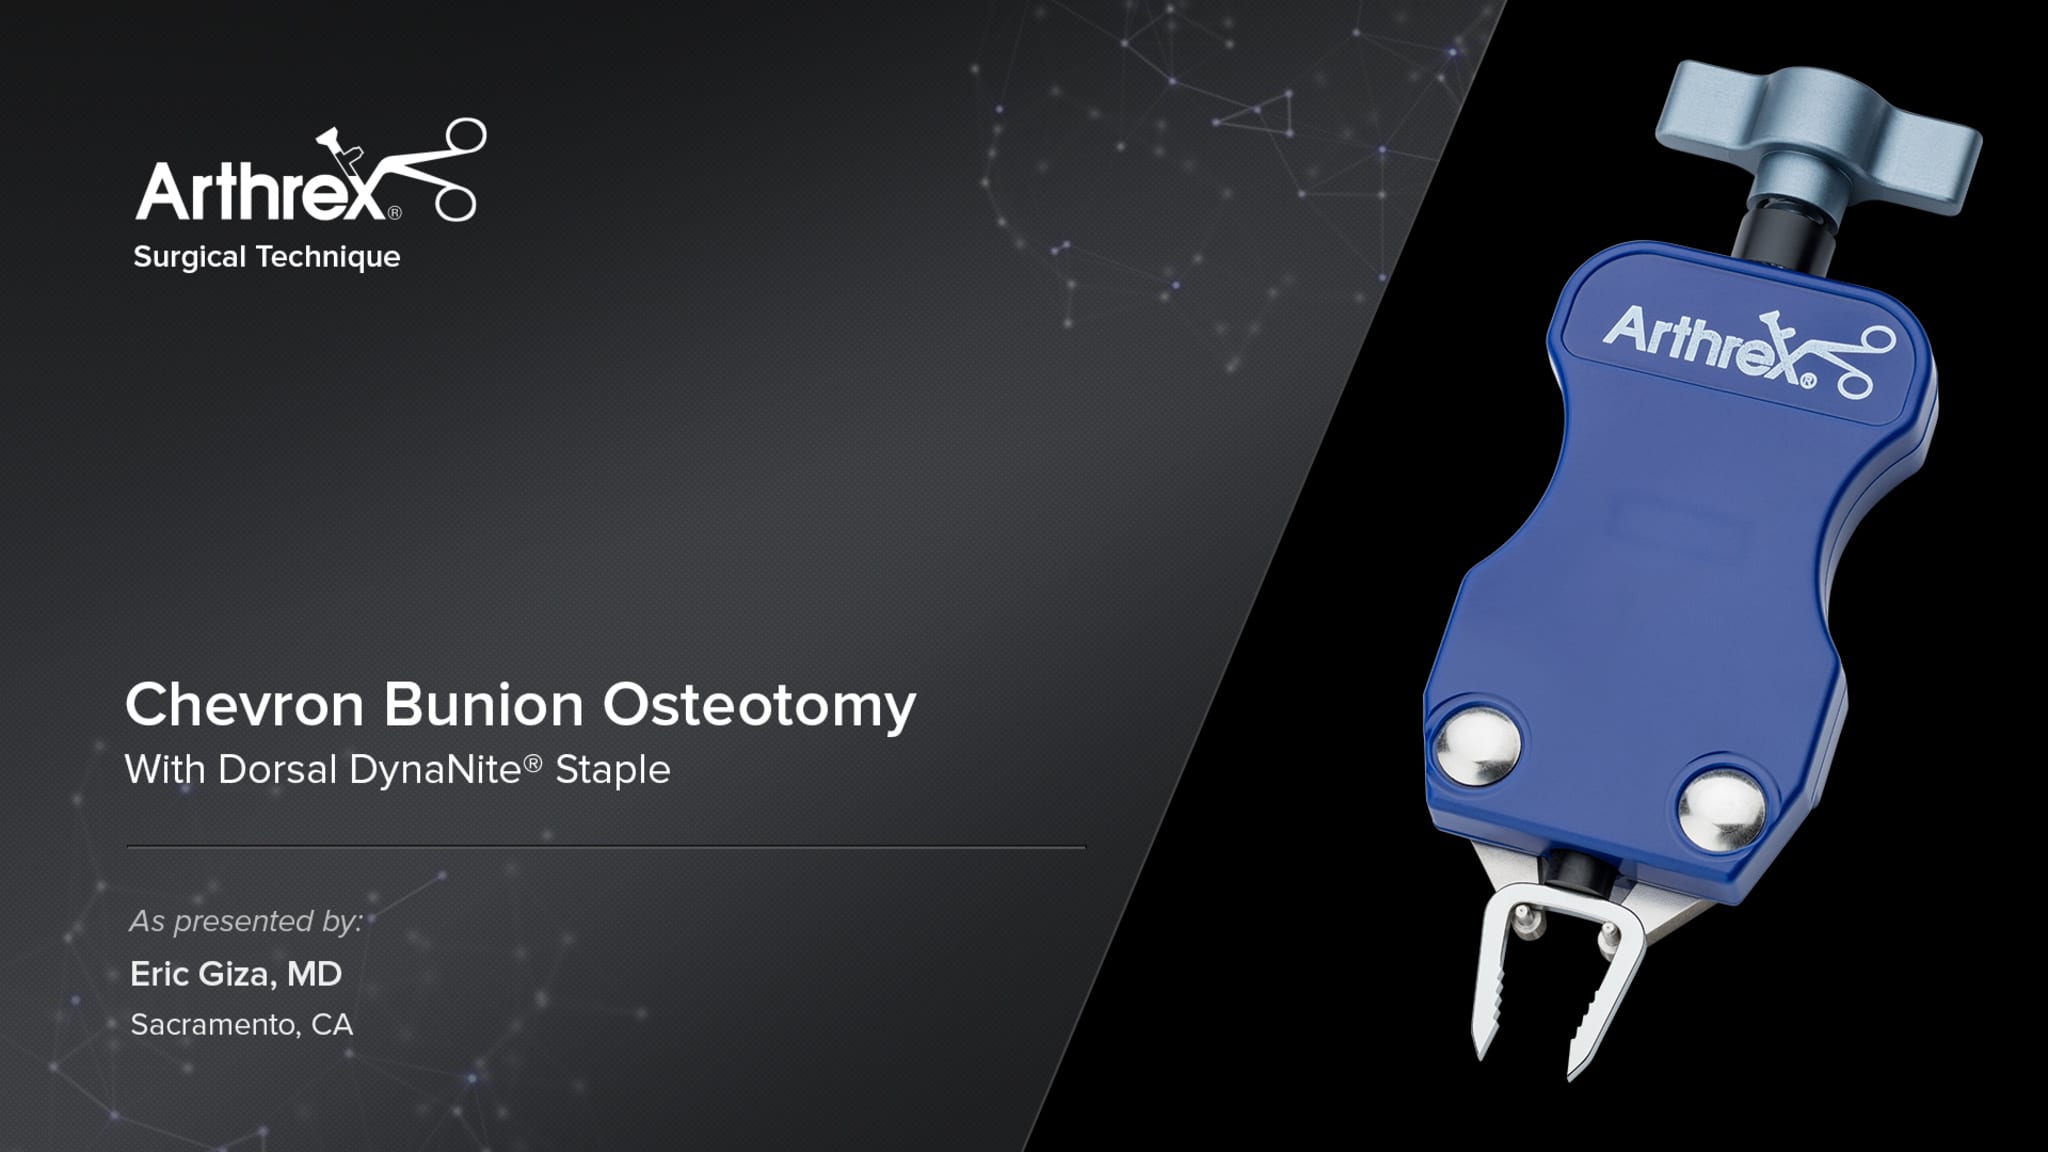 Chevron Bunion Osteotomy With Dorsal DynaNite® Staple